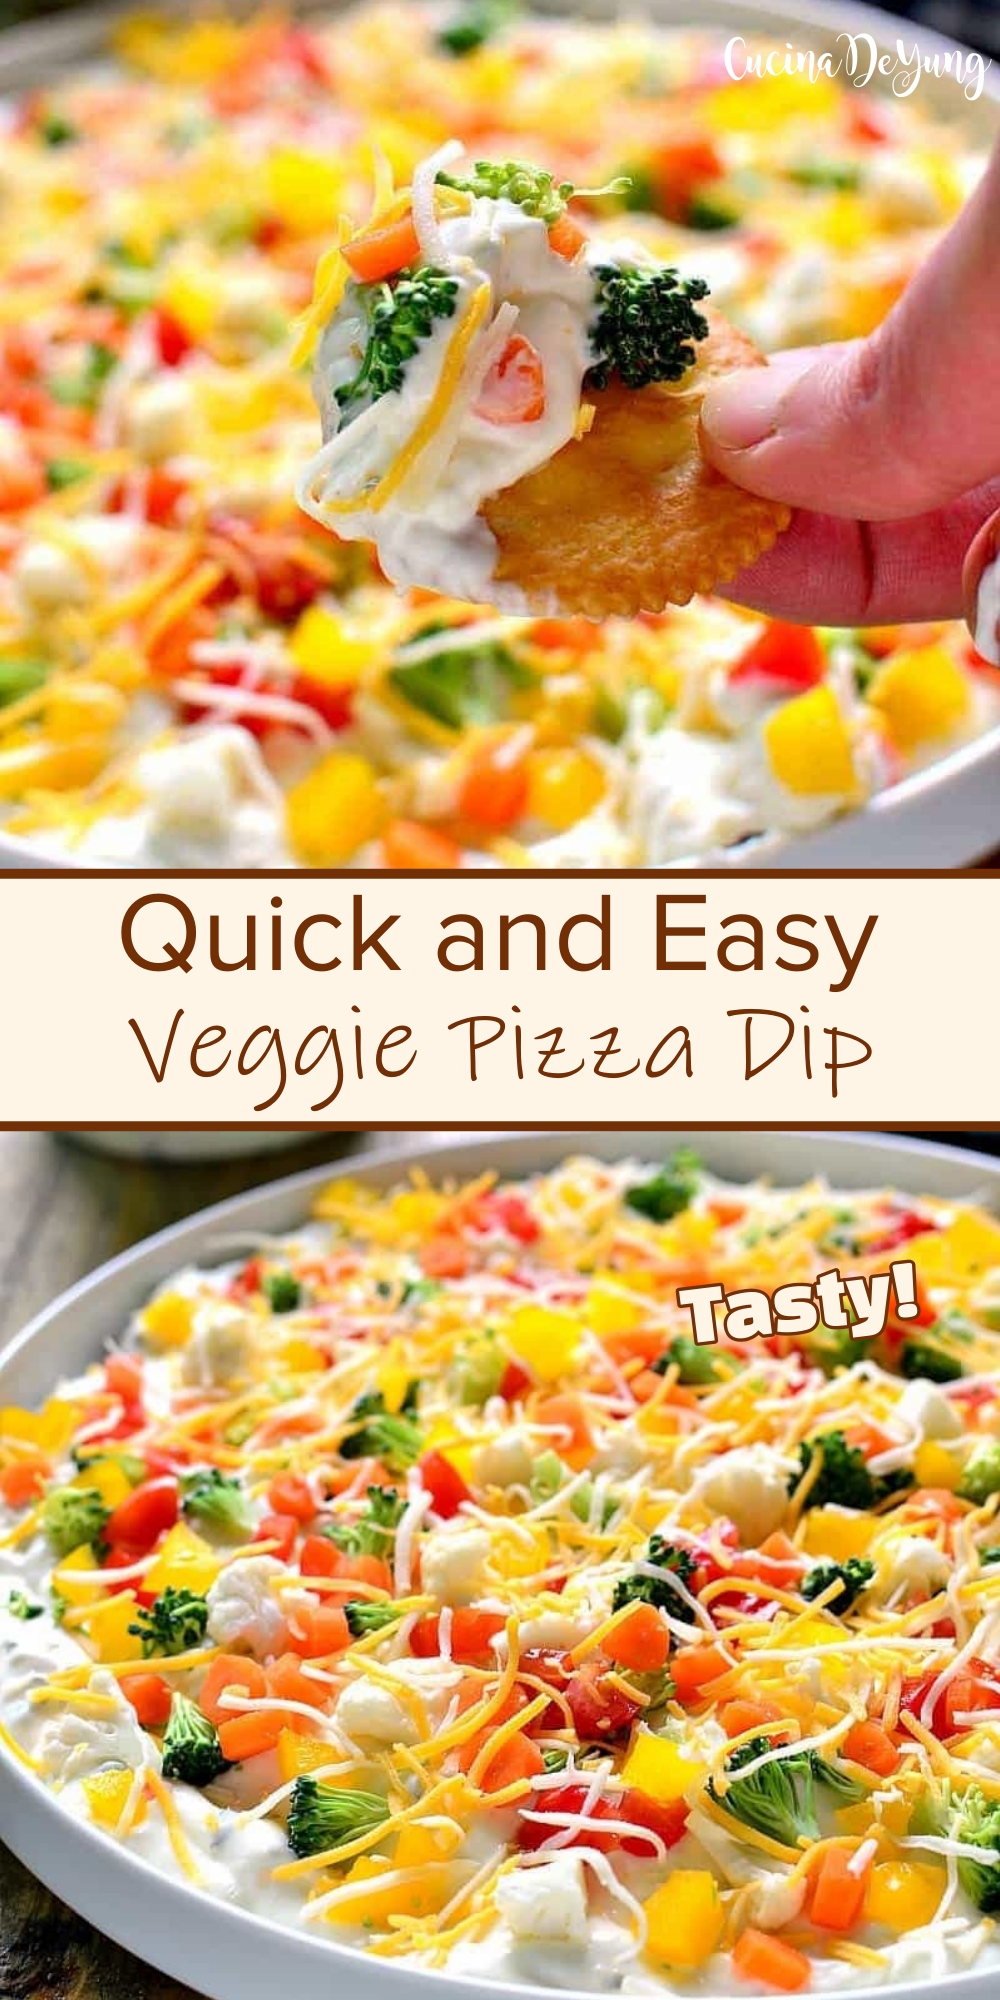 Quick and Easy Veggie Pizza Dip - CUCINADEYUNG